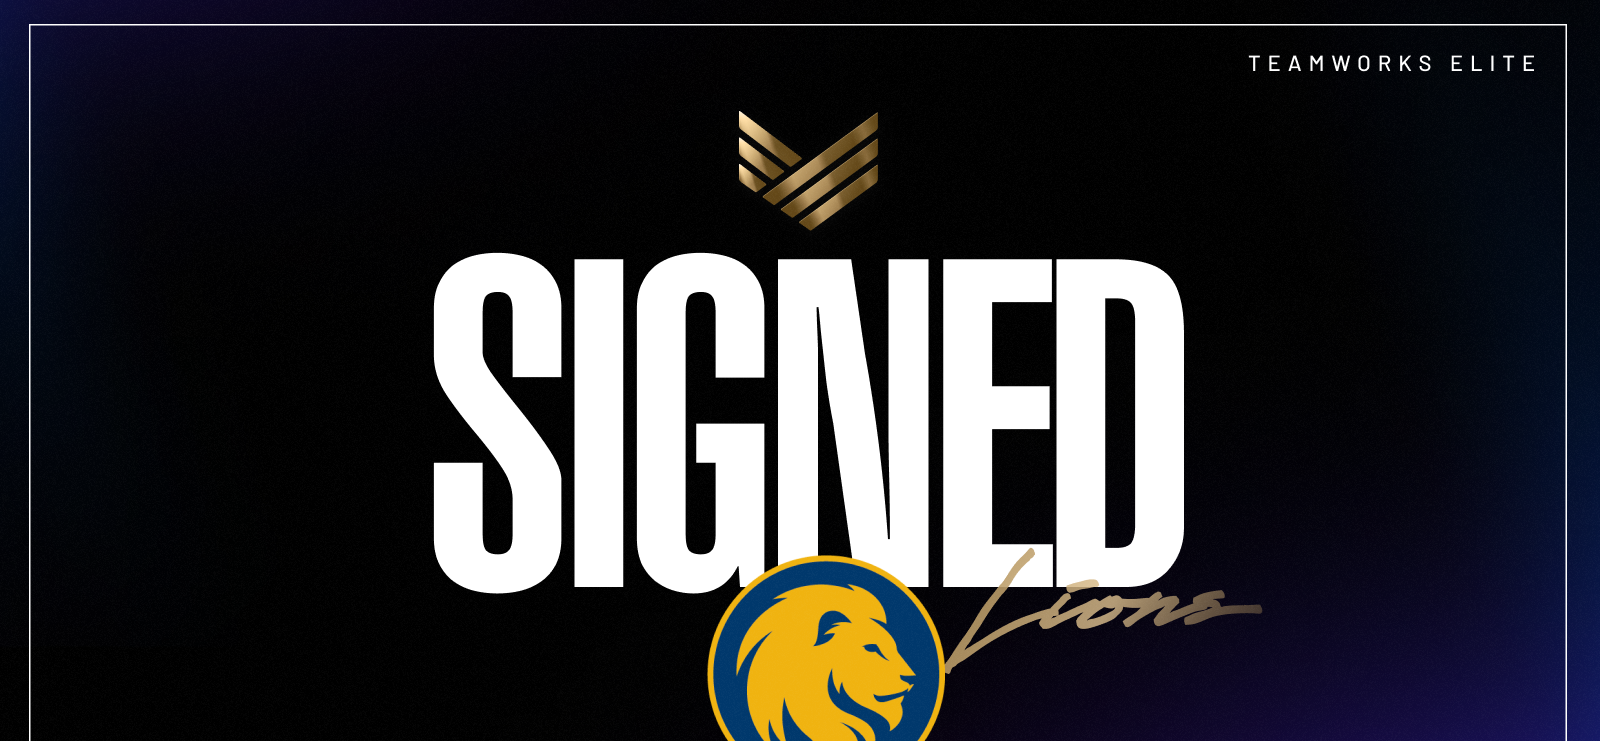 Image stating "Signed Lions" with university's Lion logo.